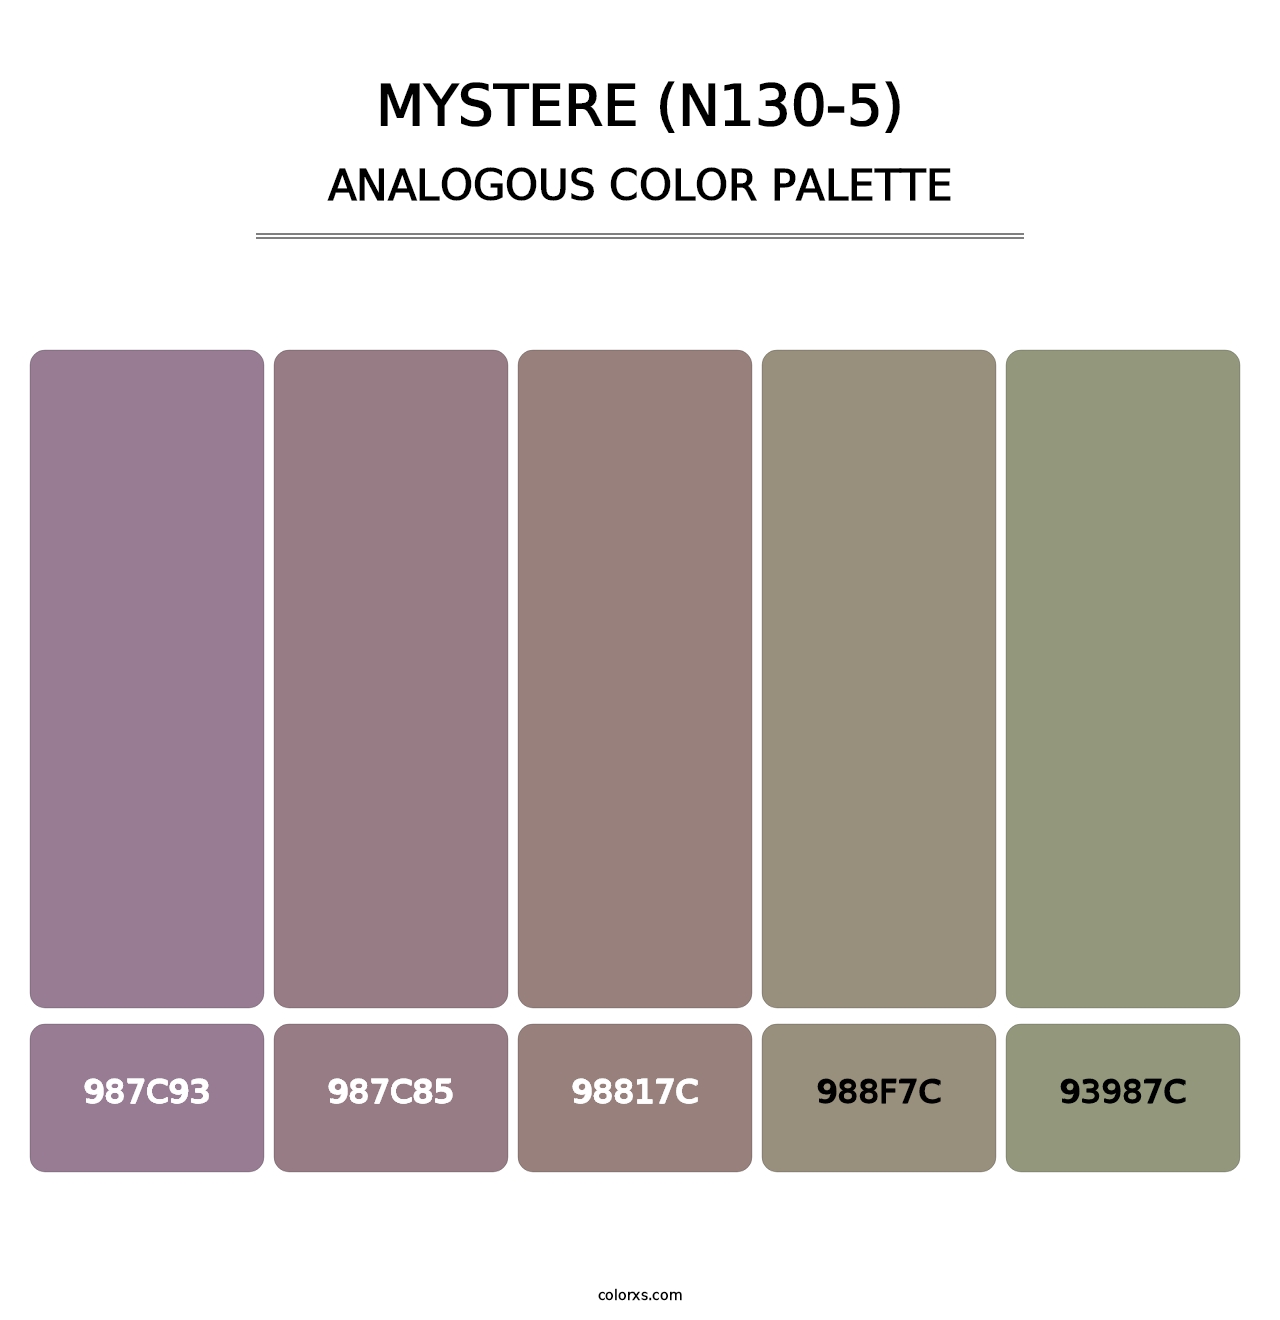 Mystere (N130-5) - Analogous Color Palette